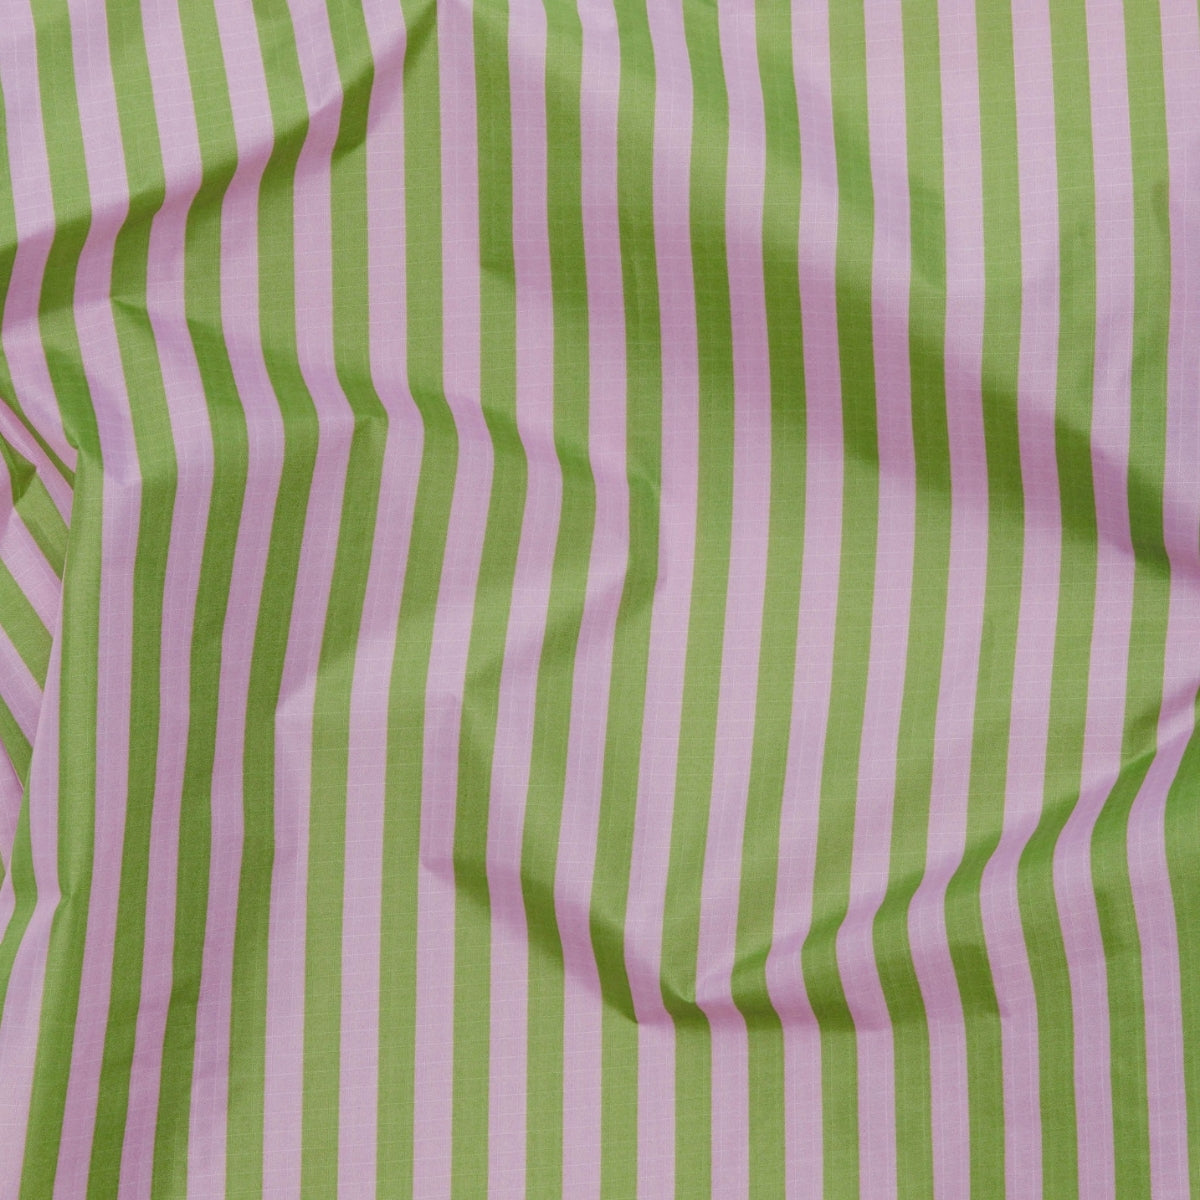 Baggu Standard Bag in Avocado Candy Stripe